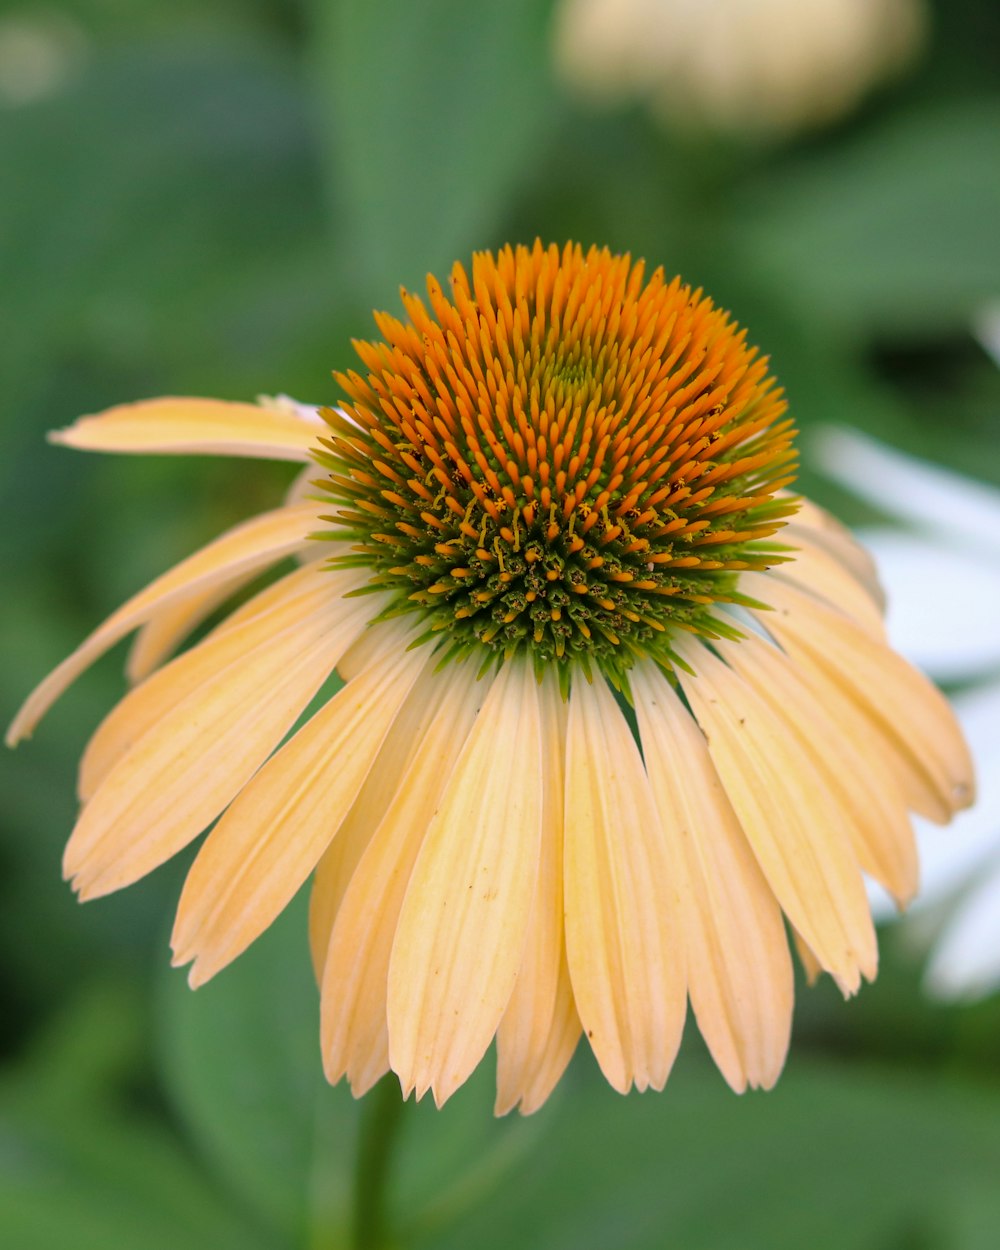 yellow and brown flower in tilt shift lens